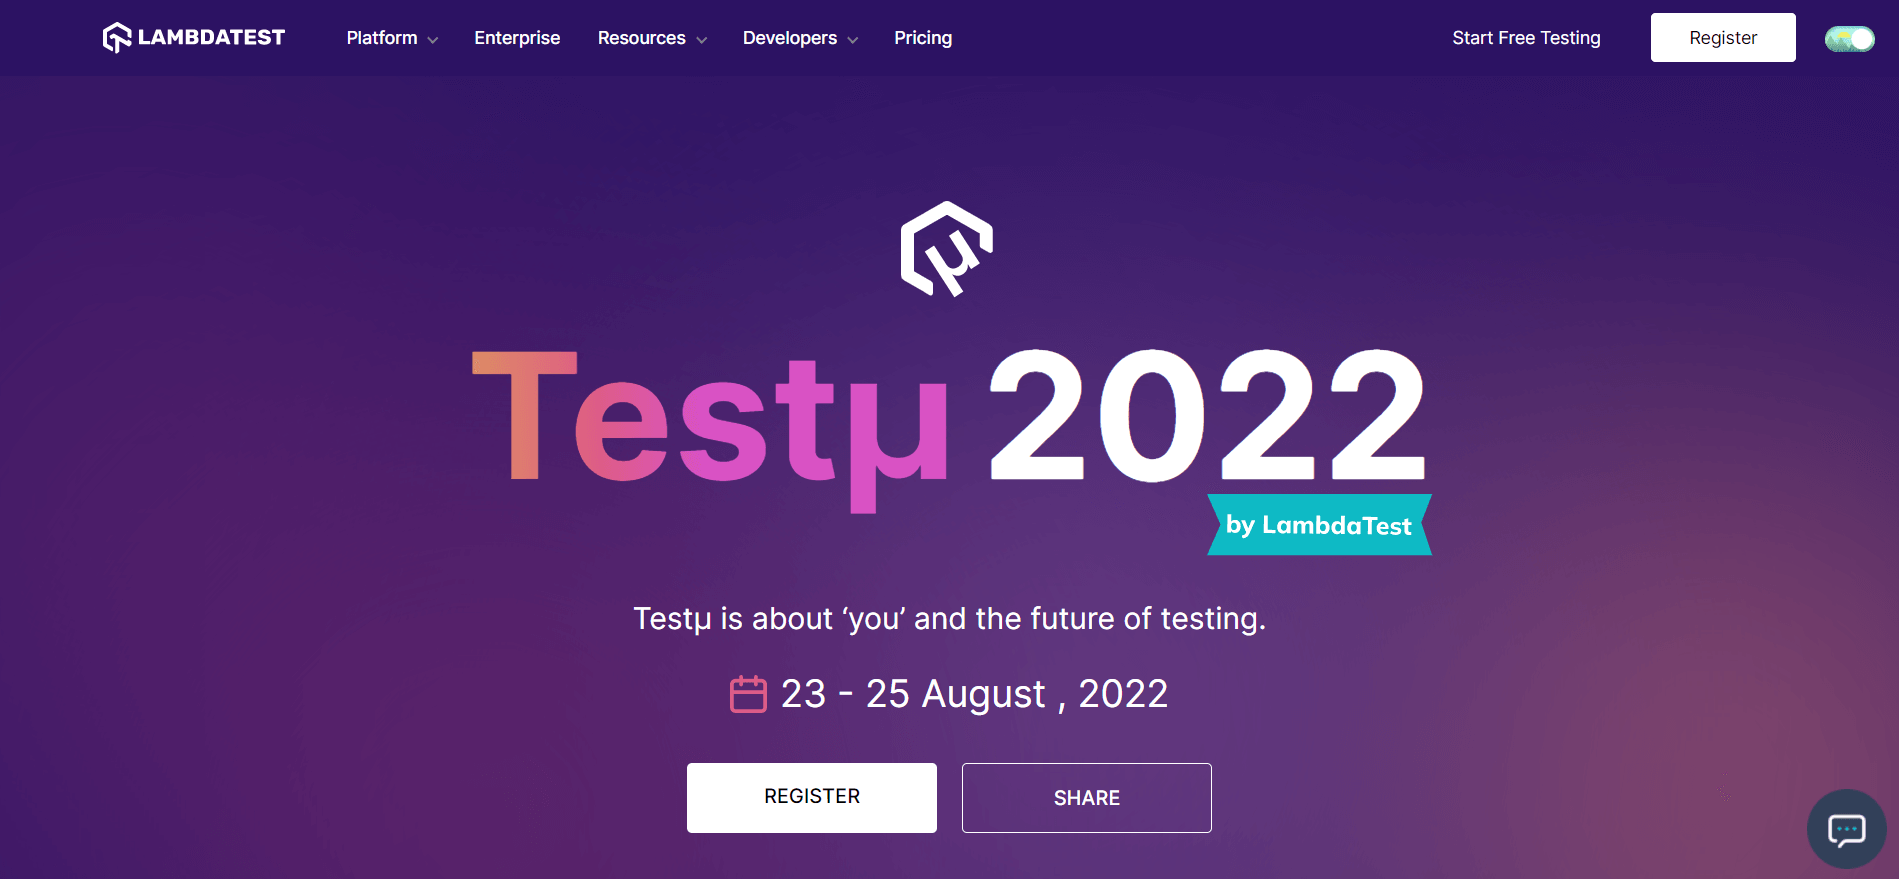 Testμ Conference 2022 by LambdaTest